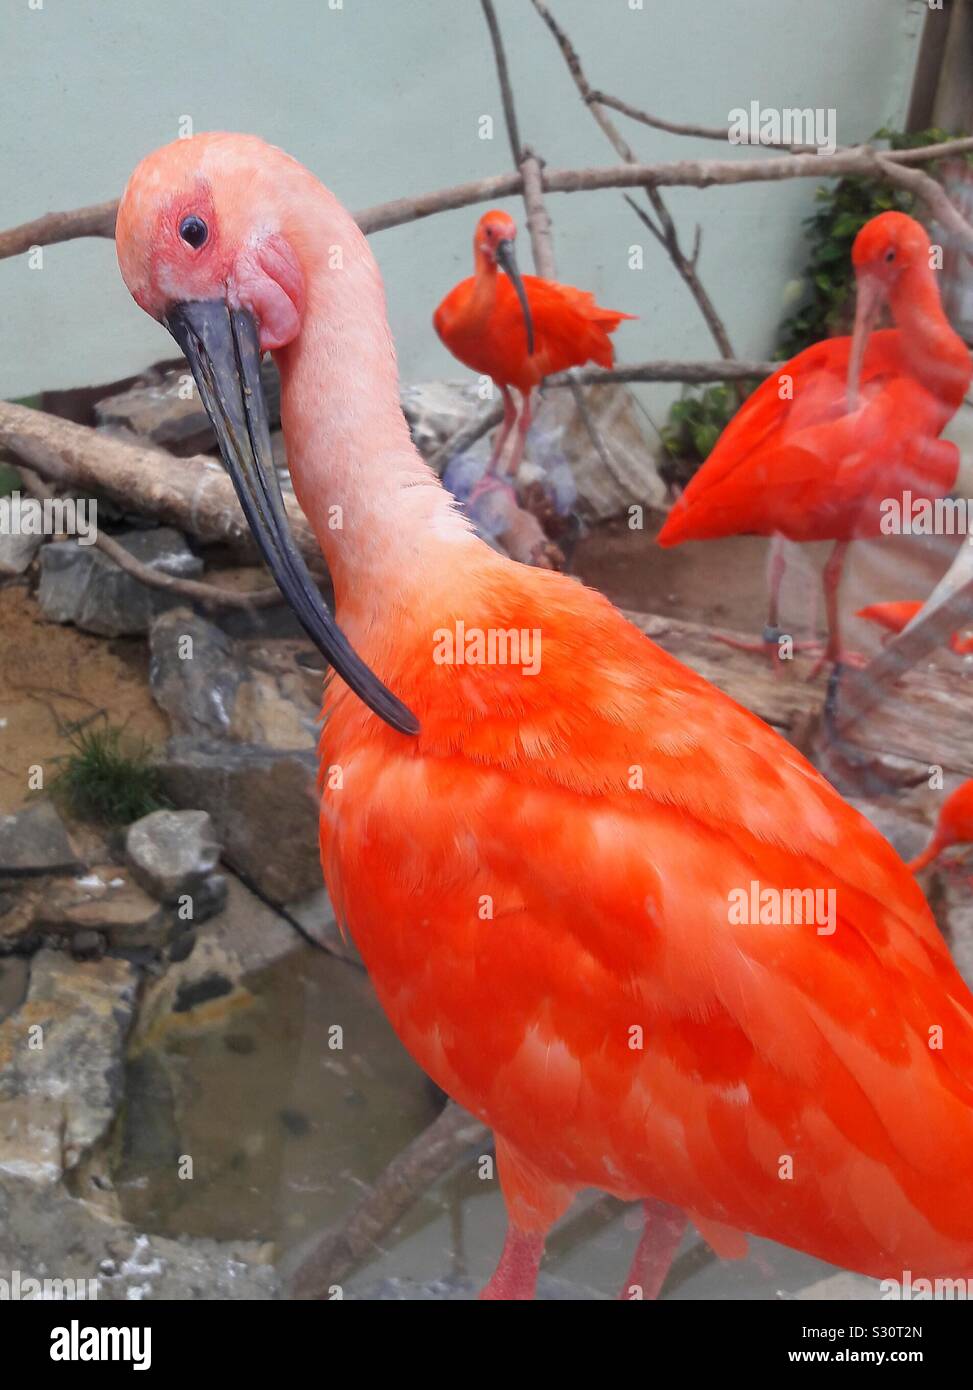 A big beautiful bird with orange color and black beak Stock Photo - Alamy